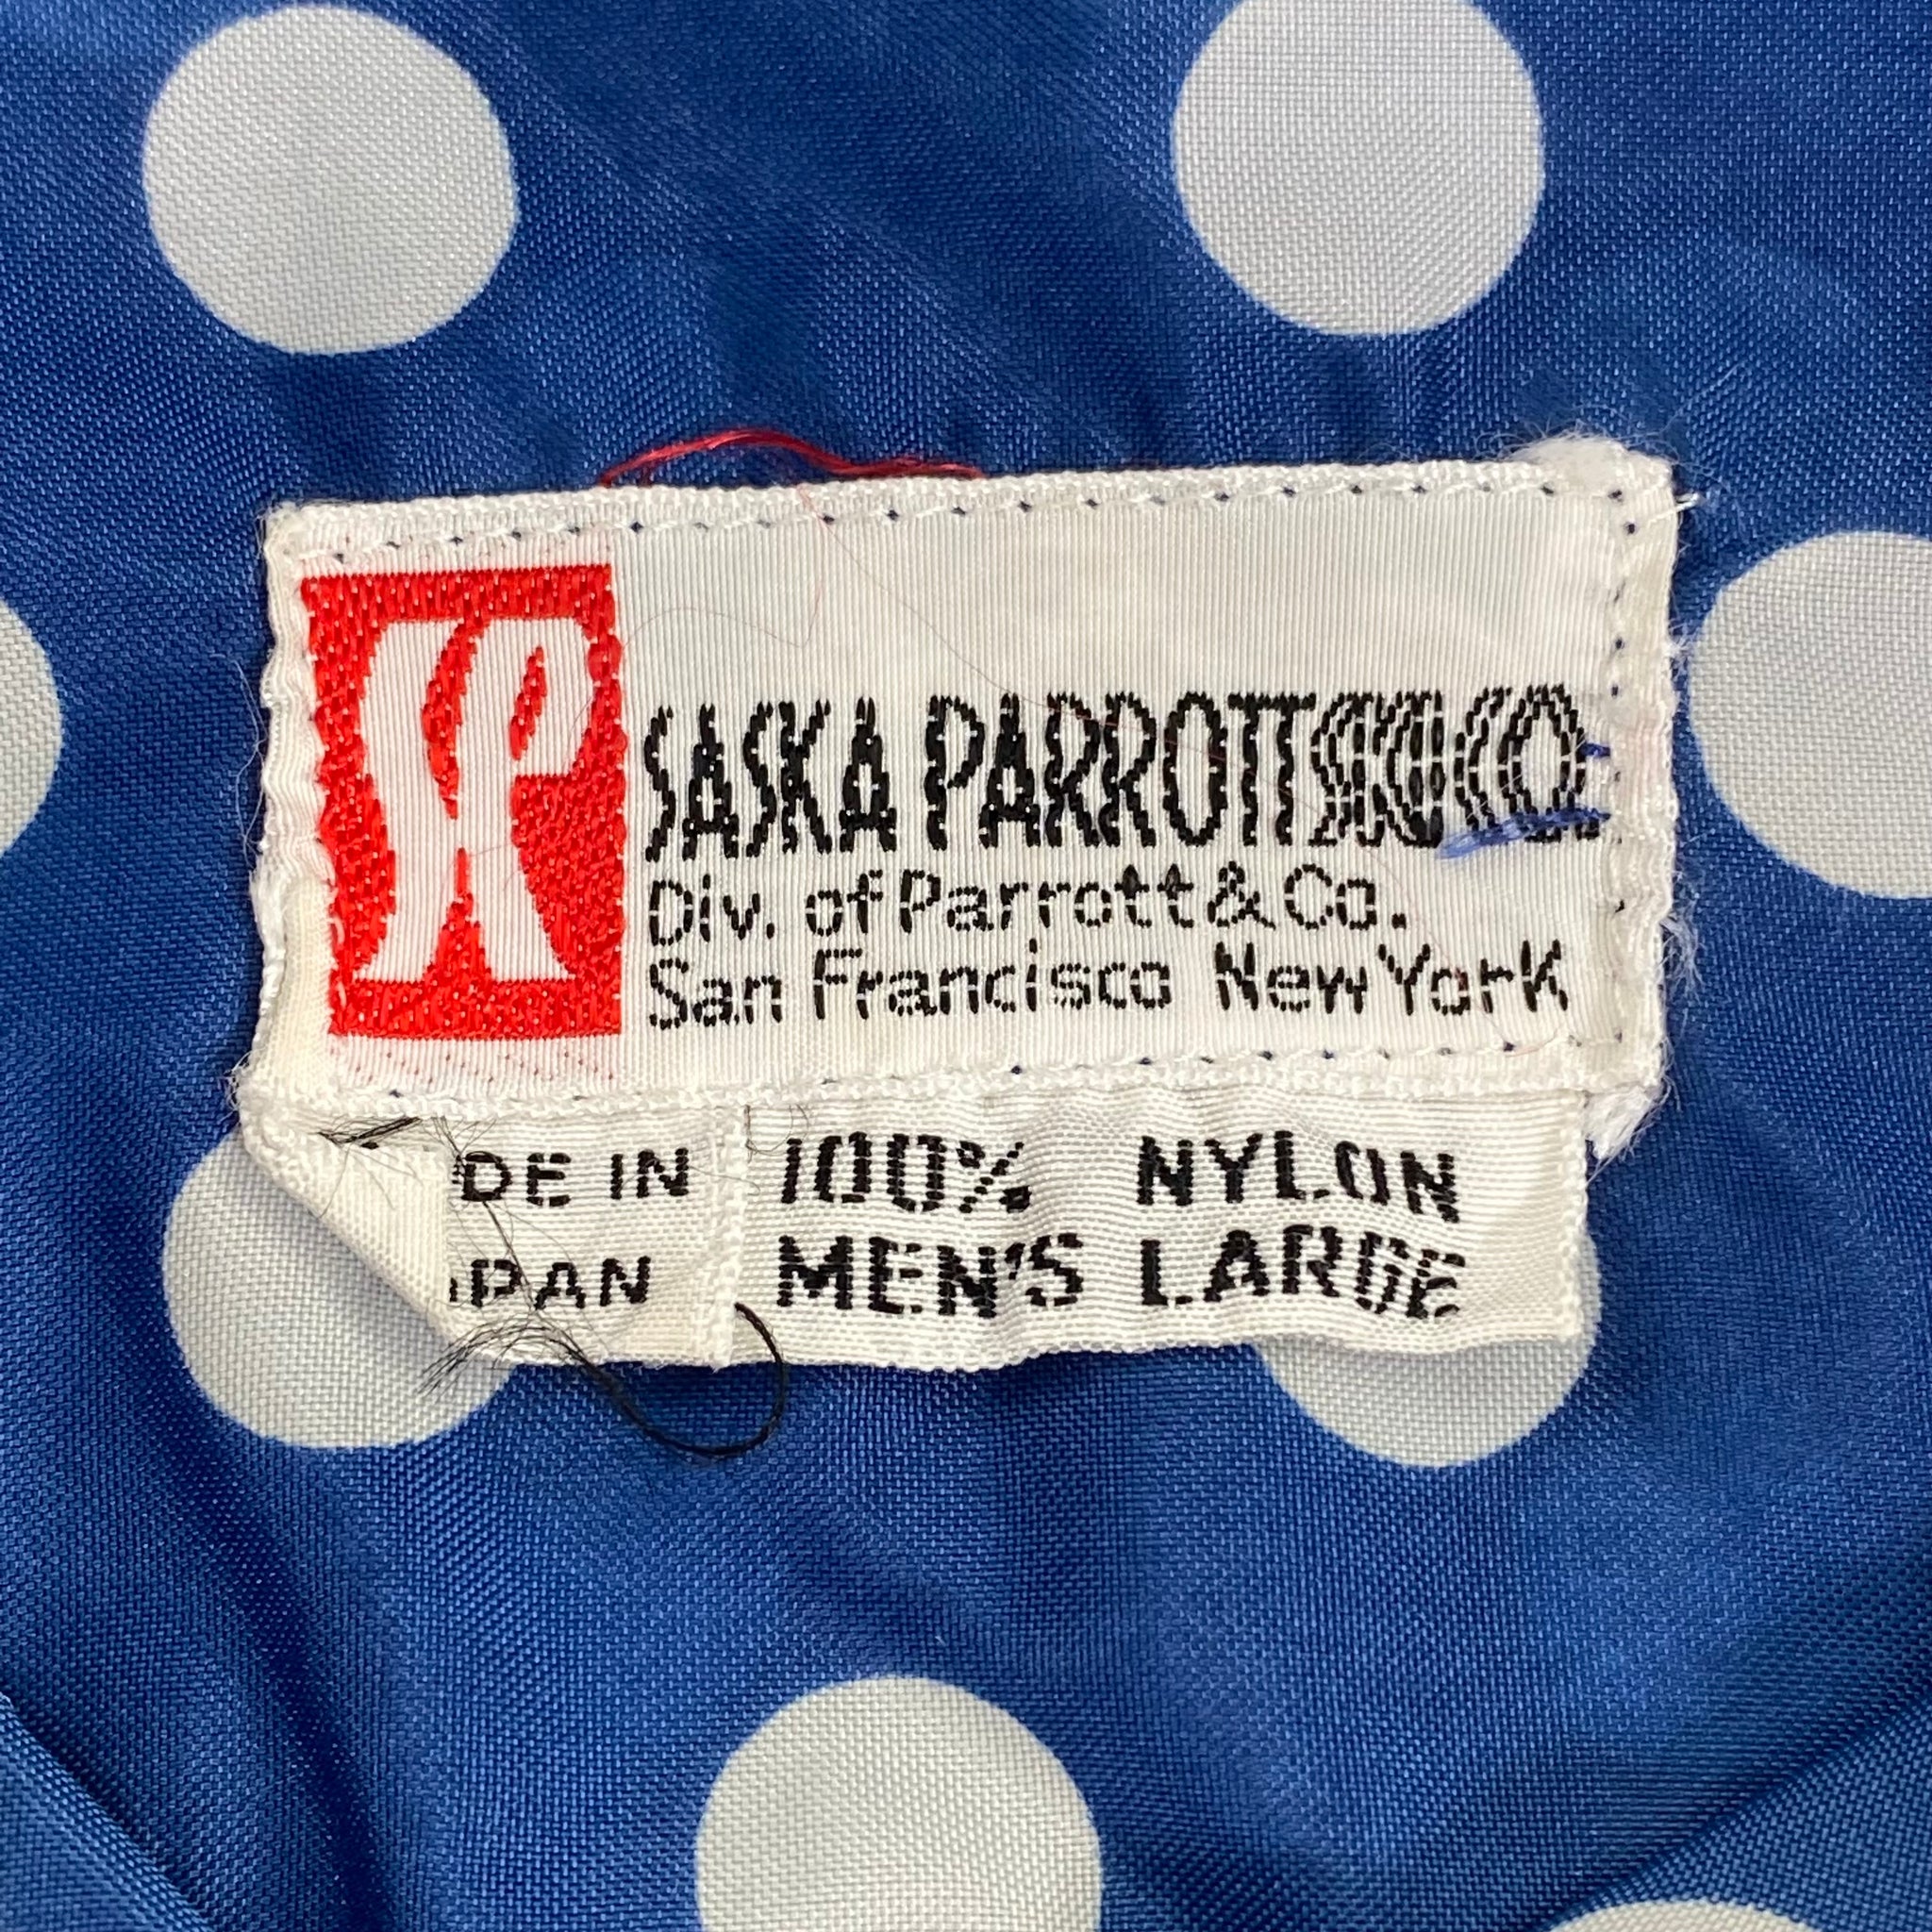 70s Nylon polka dot shirt. light weight. Large